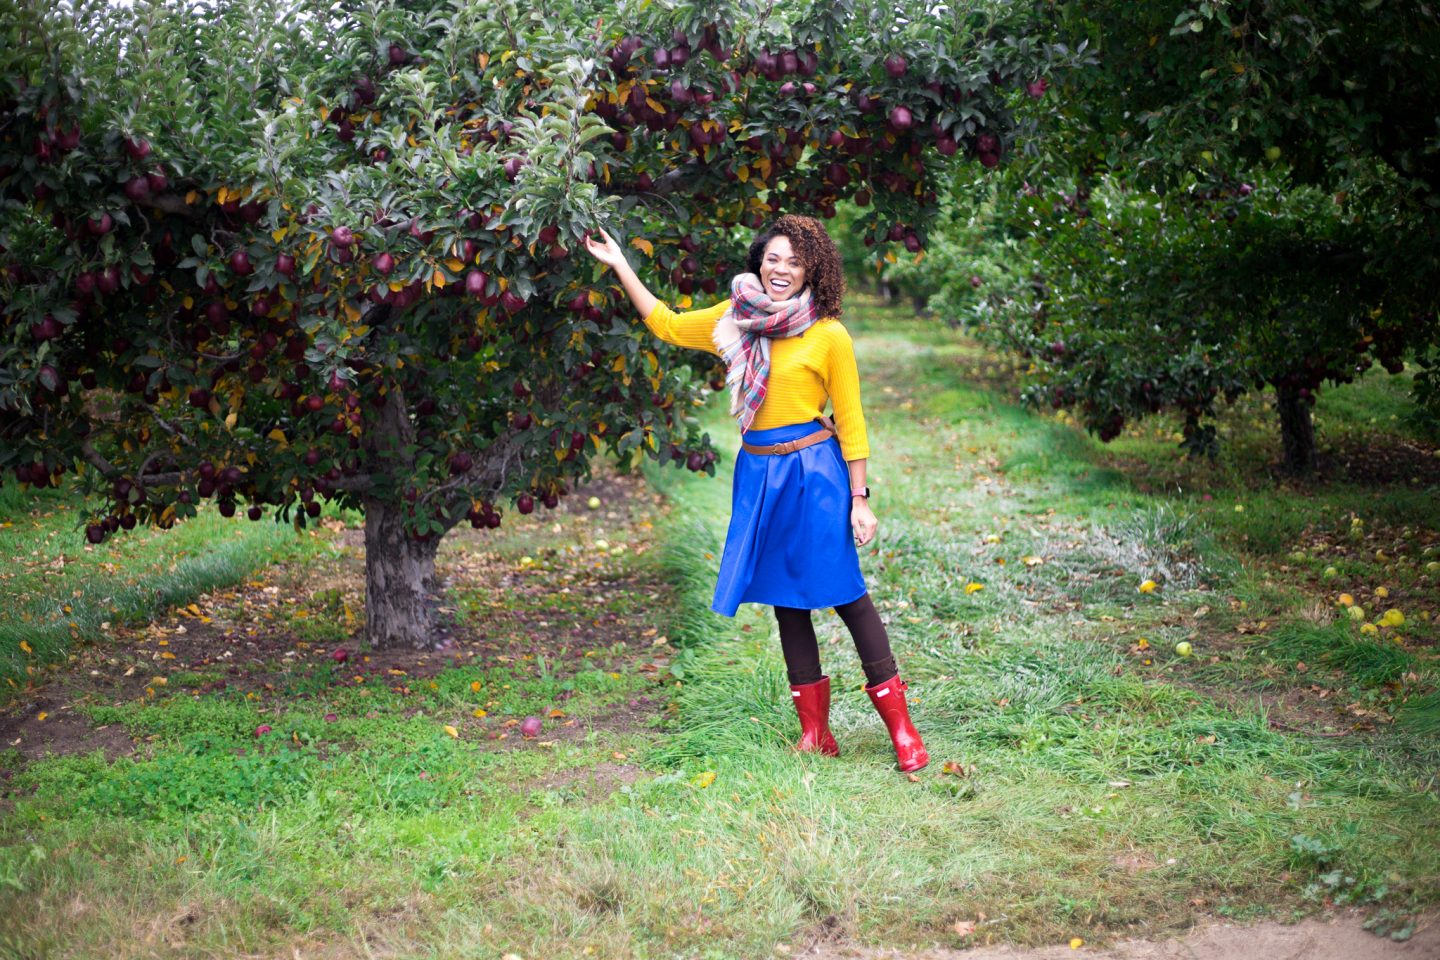 Cosmic Crisp – Washington apple orchard tour